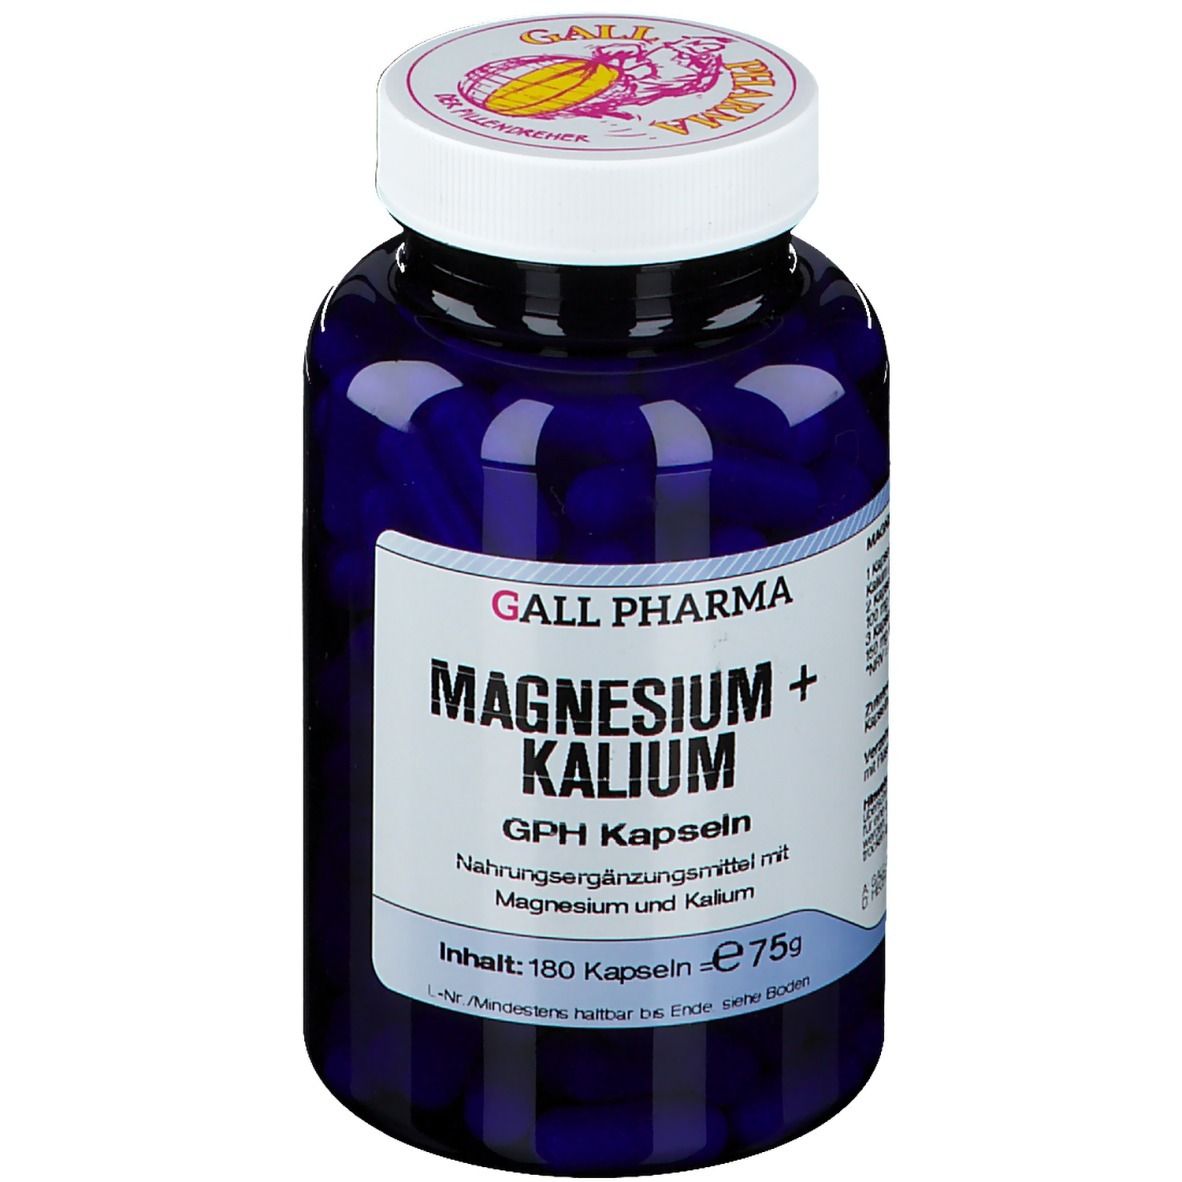 GALL PHARMA Magnesium + Kalium